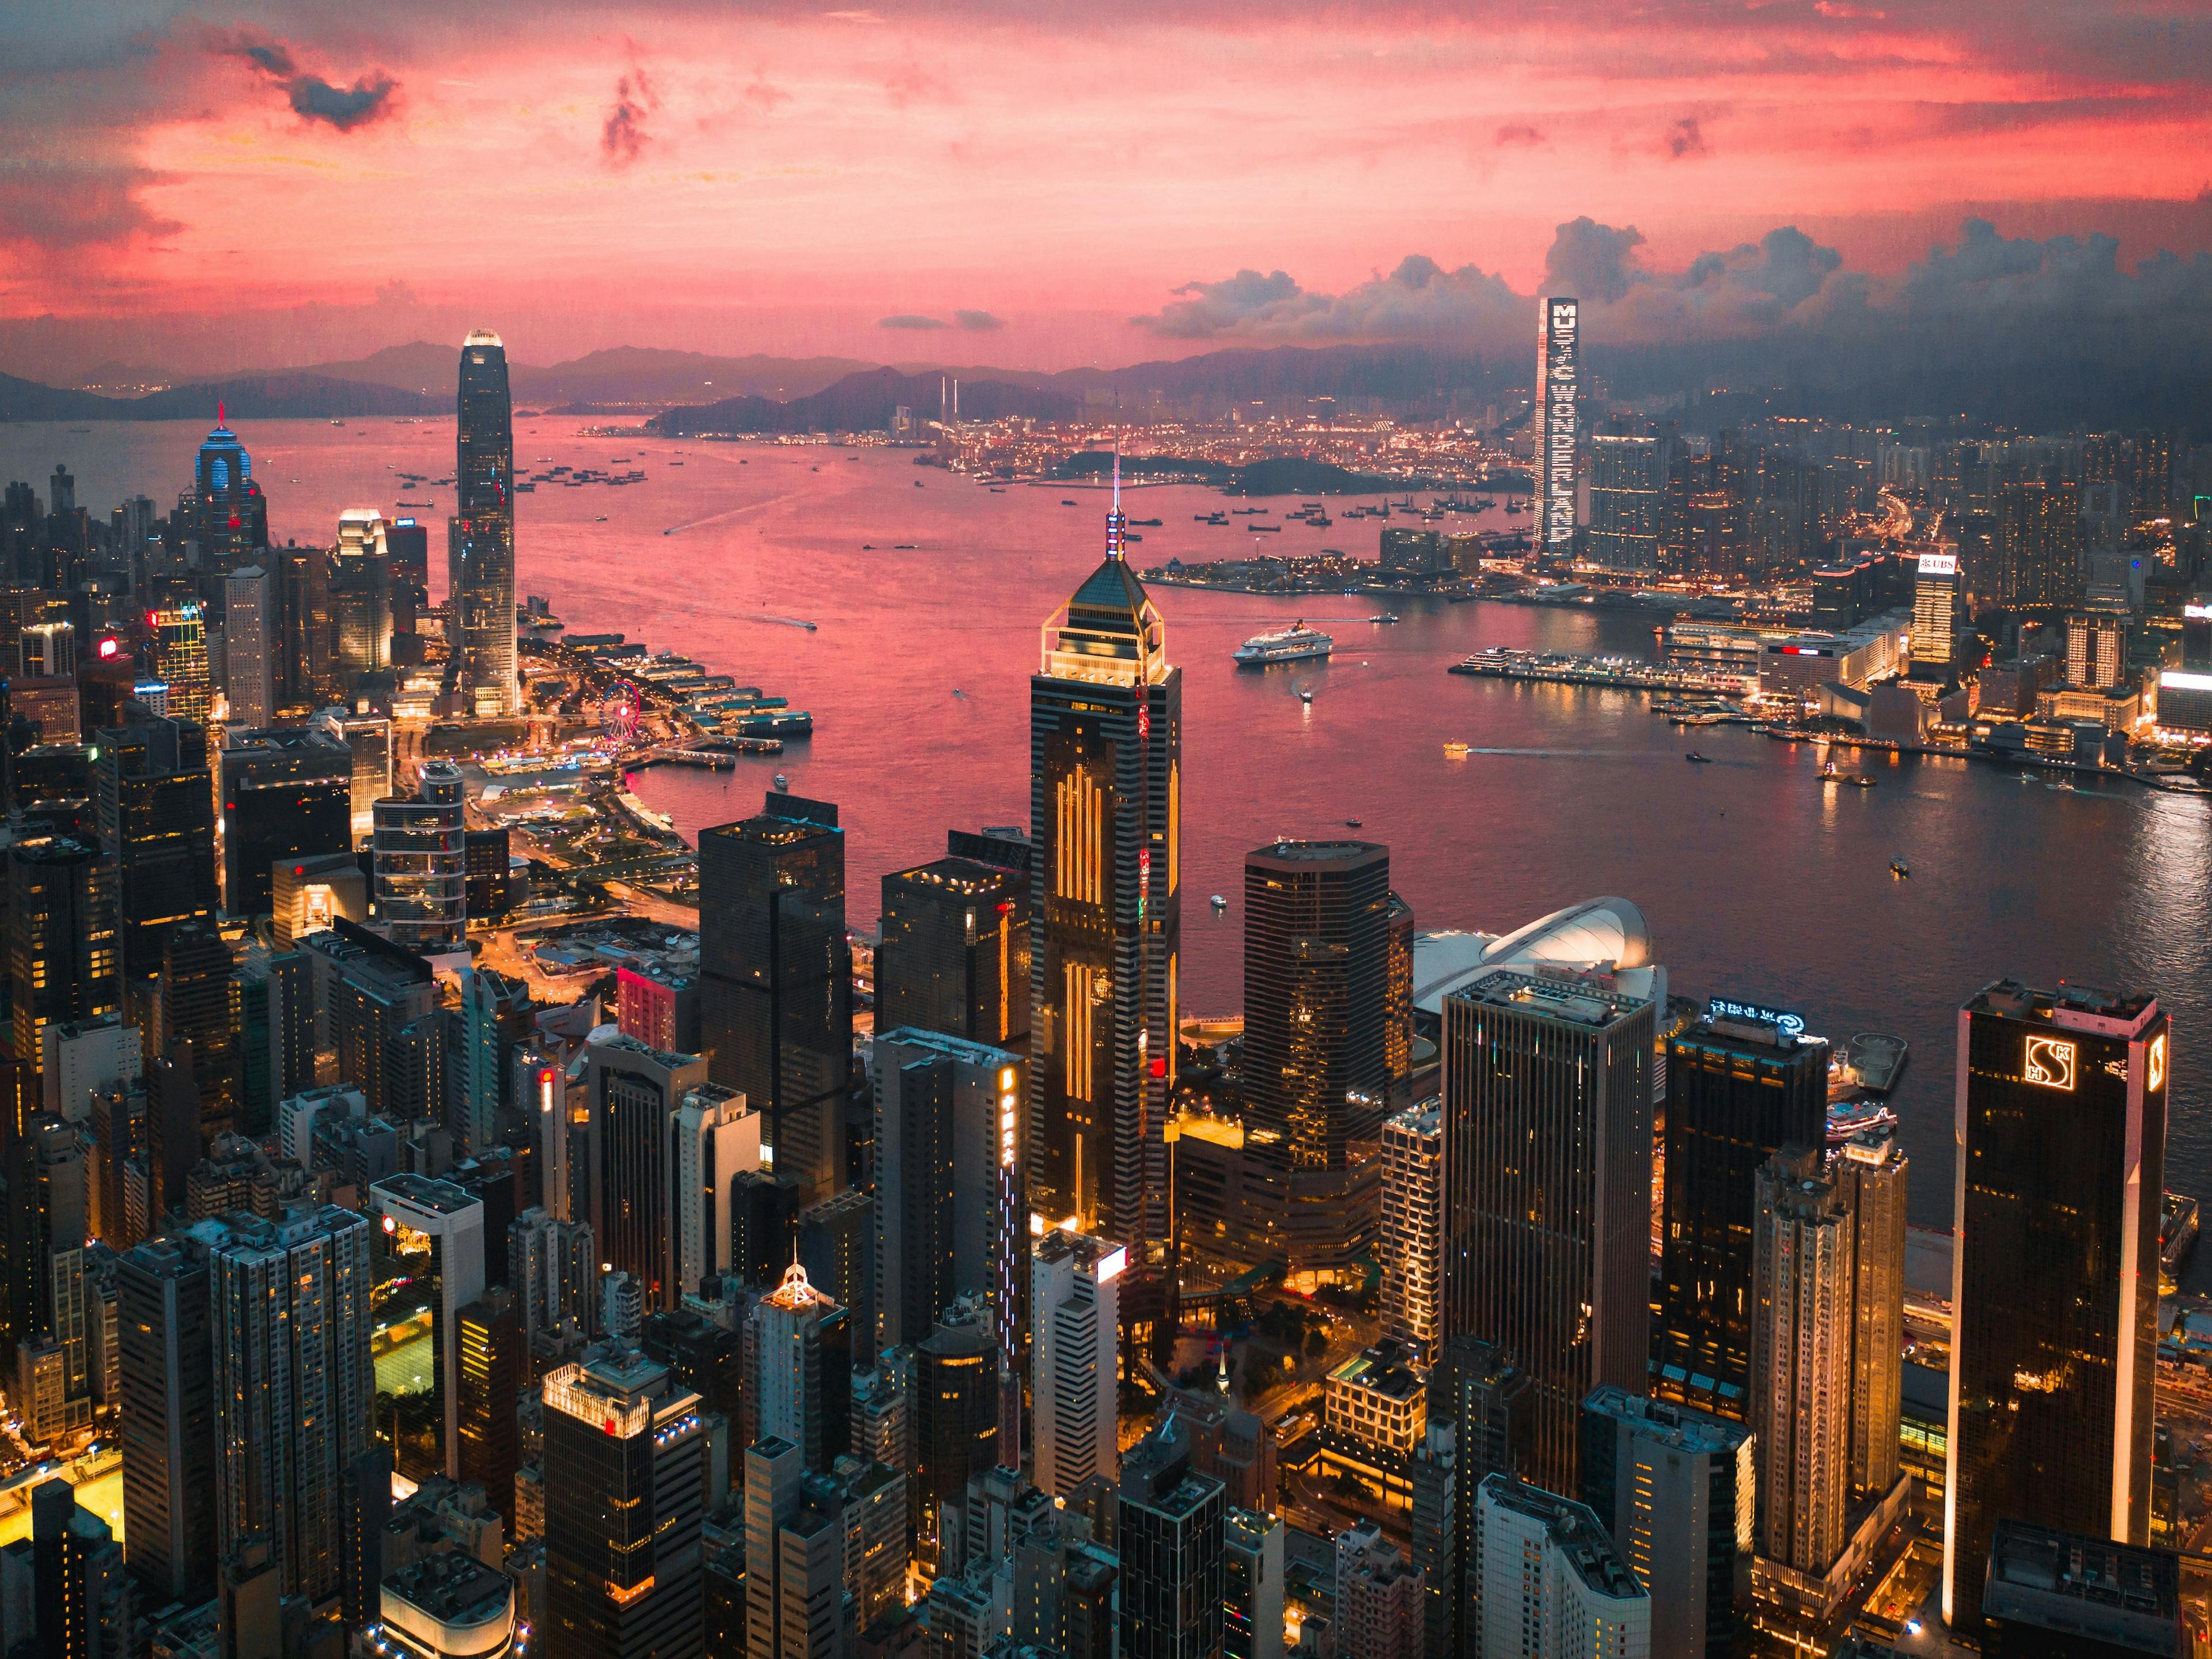 Hong Kong skyline during sunset